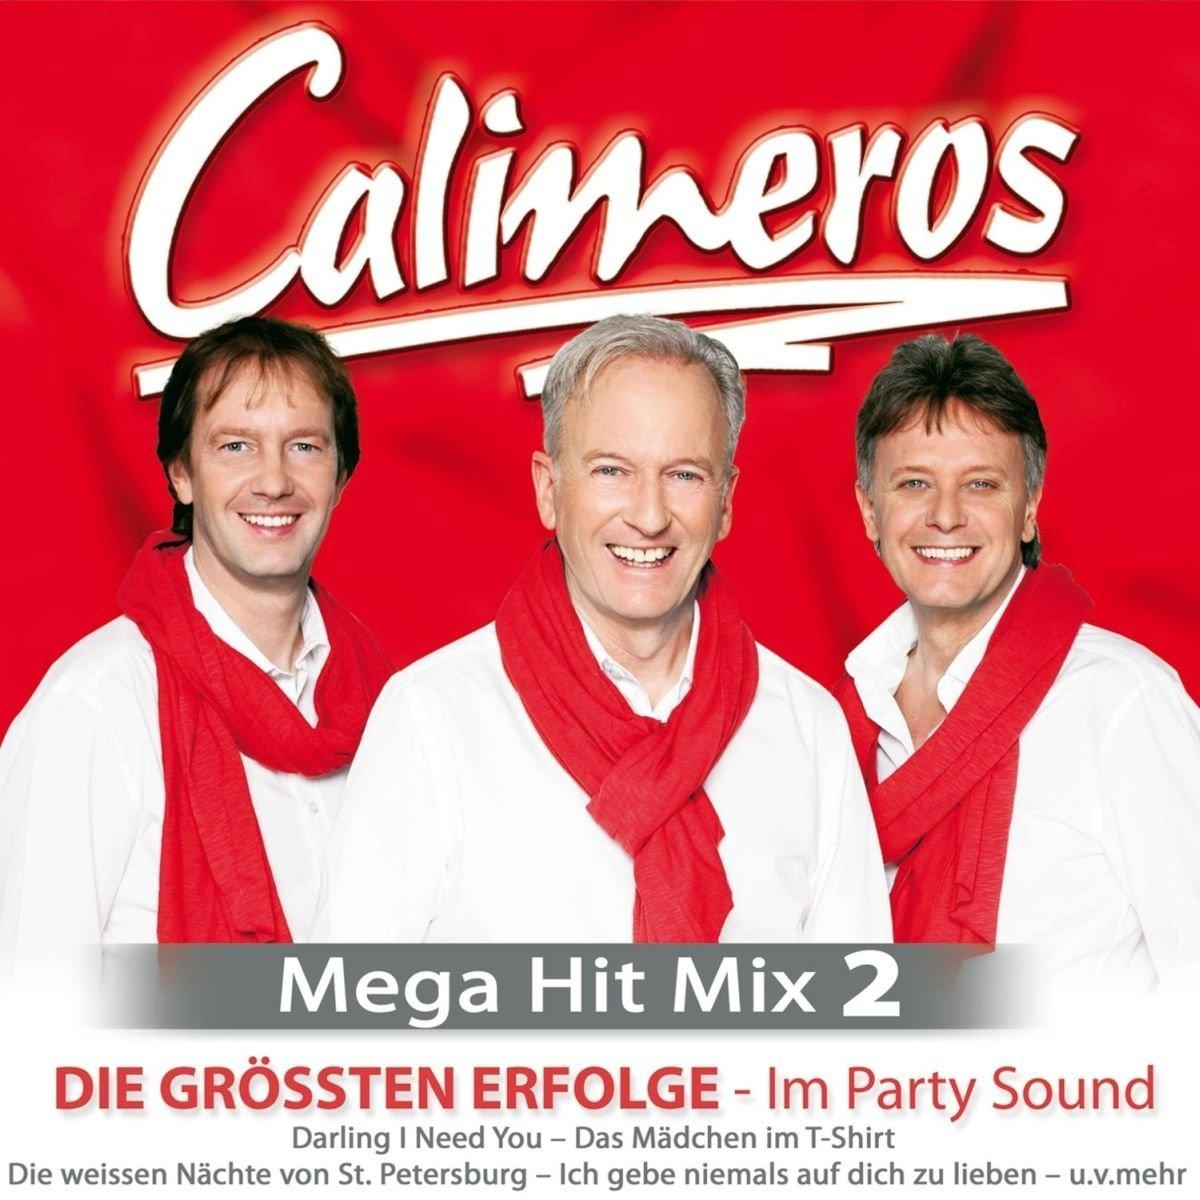 größten E Mix Calimeros Hit - (CD) Mega - 2-Die